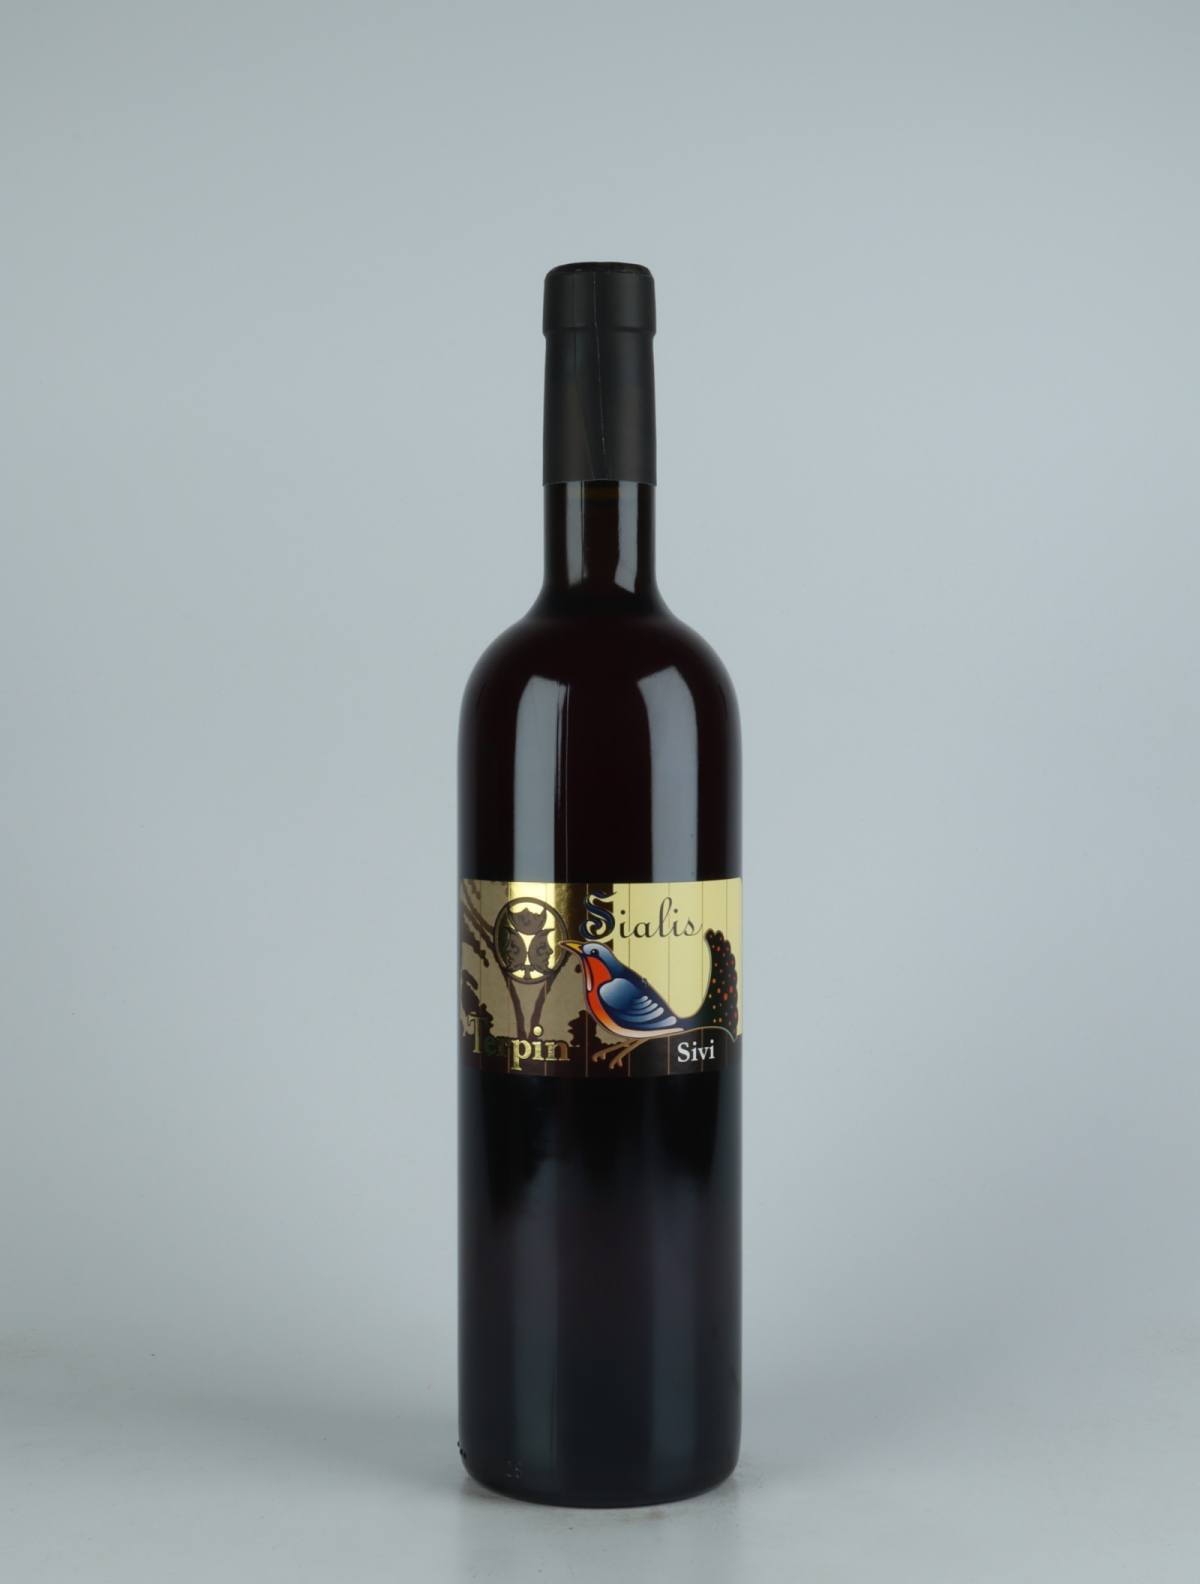 A bottle 2016 Sialis Bianco Sivi Orange wine from Franco Terpin, Friuli in Italy